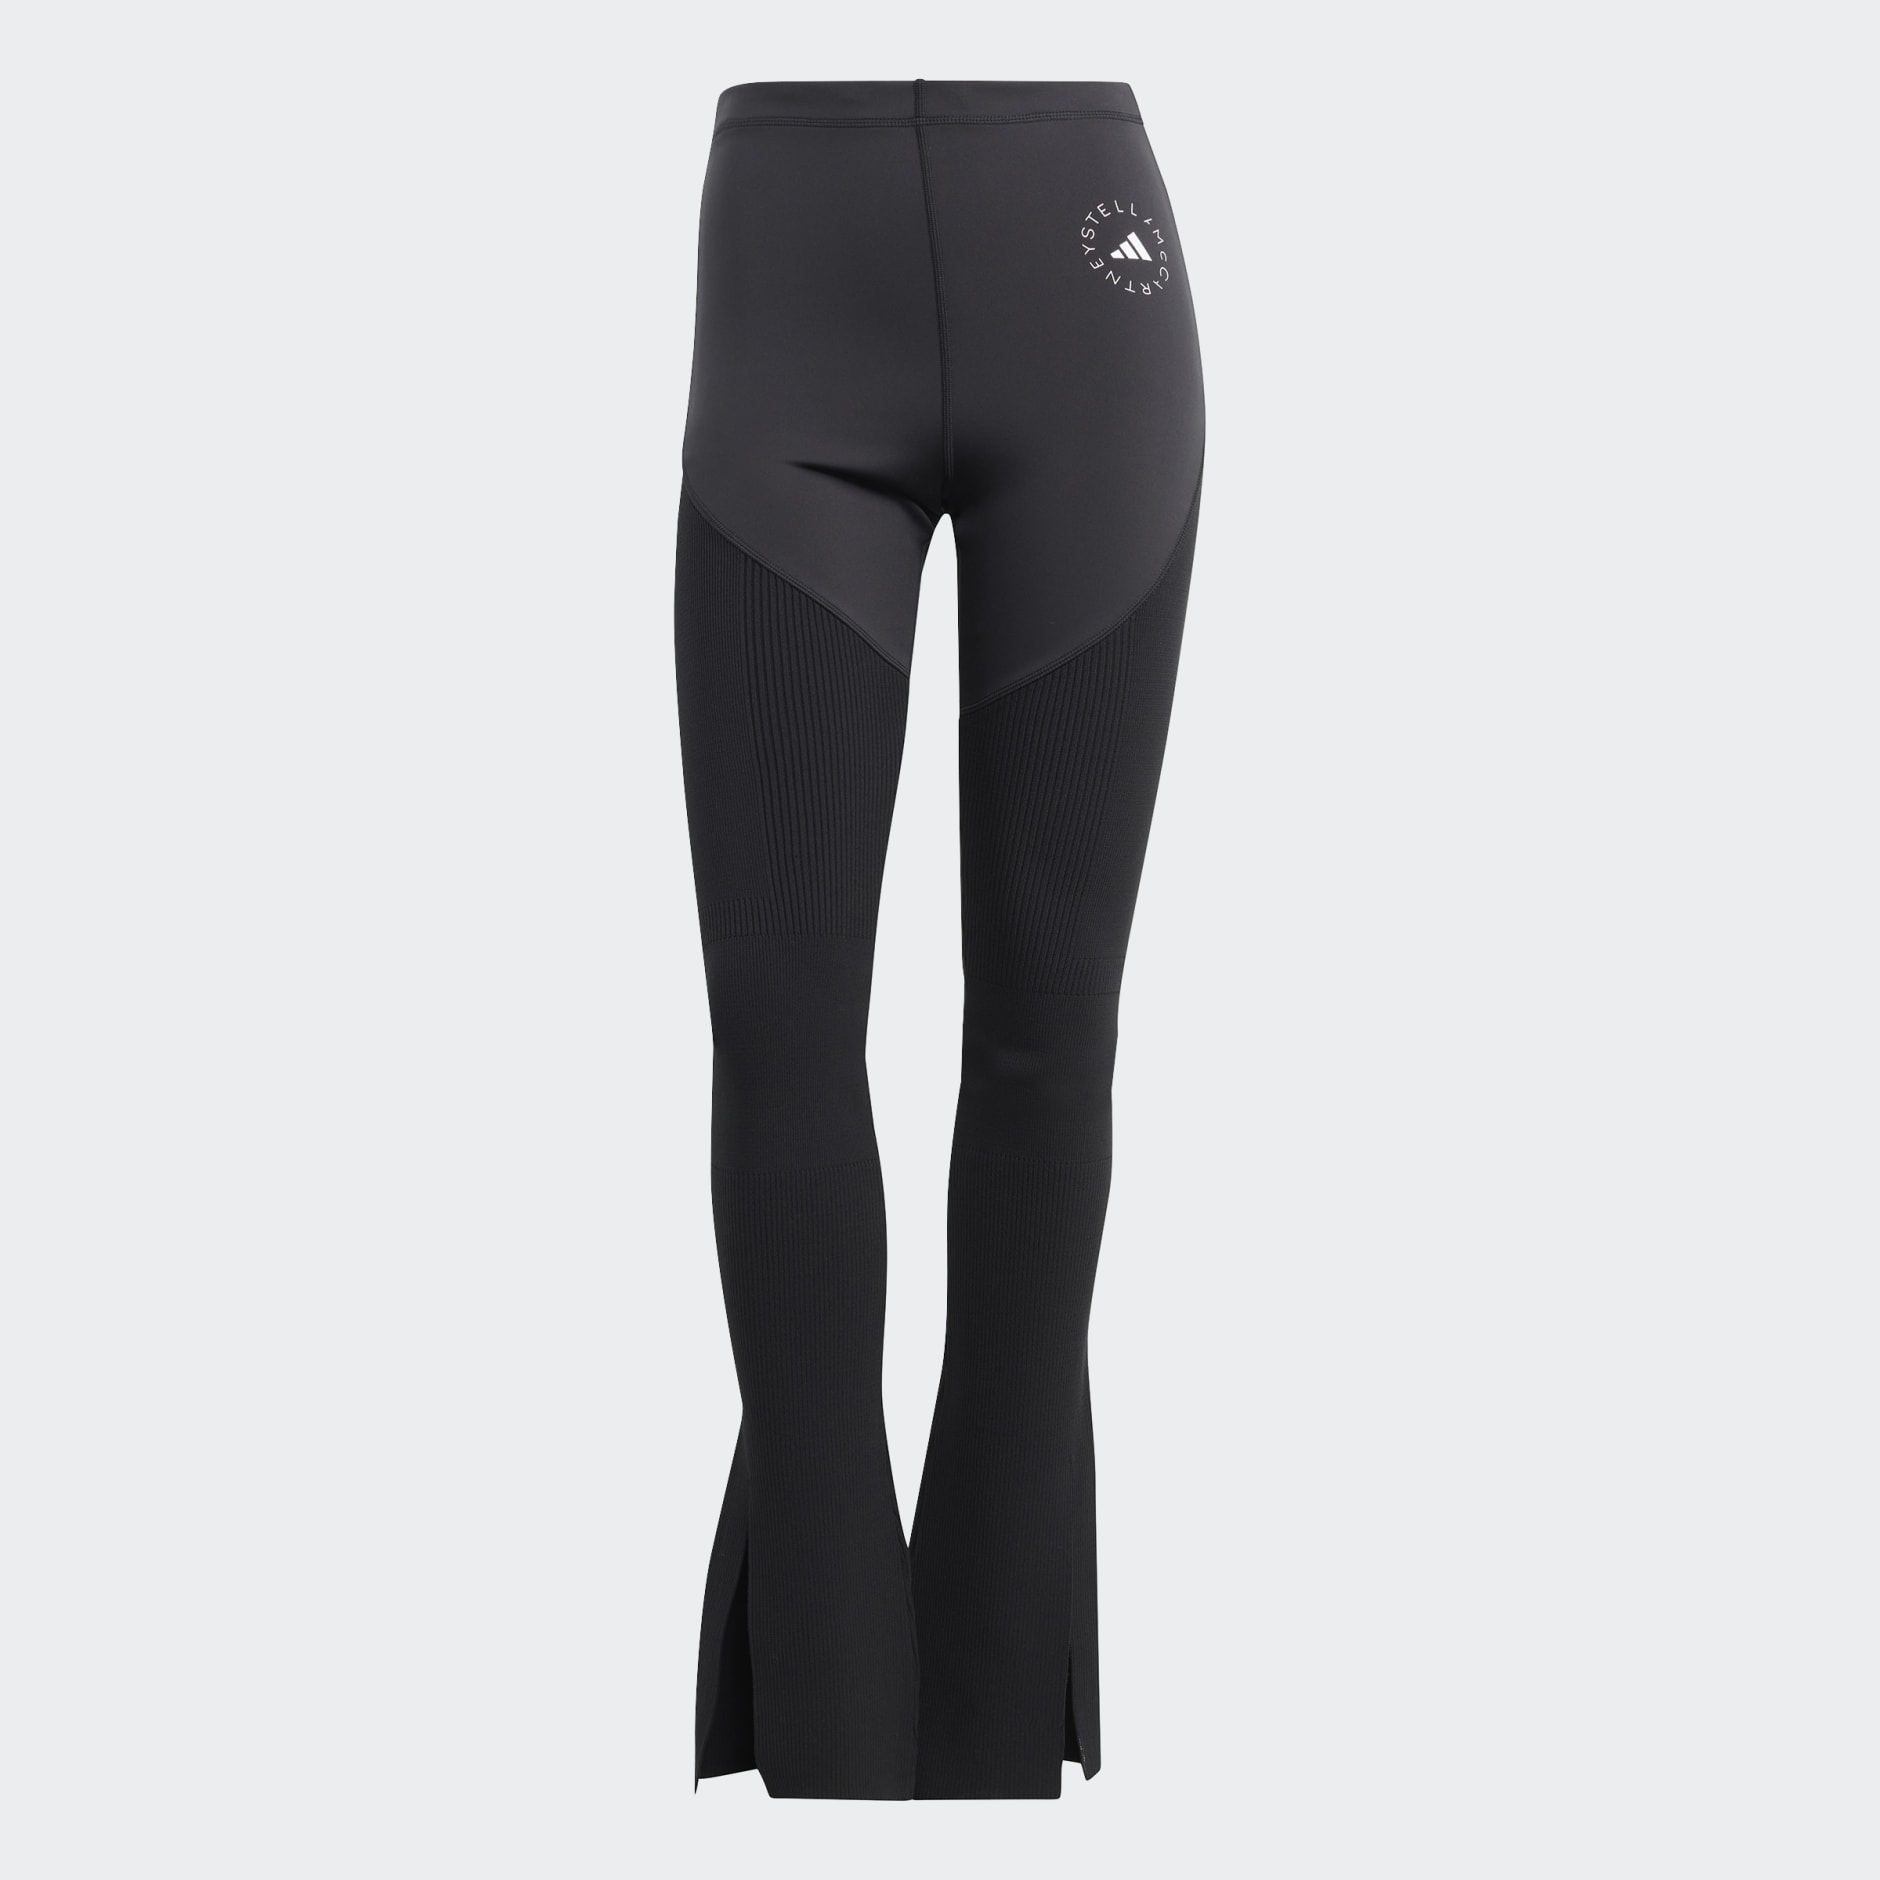 Women's Clothing - adidas by Stella McCartney TrueStrength Yoga Tight -  Black